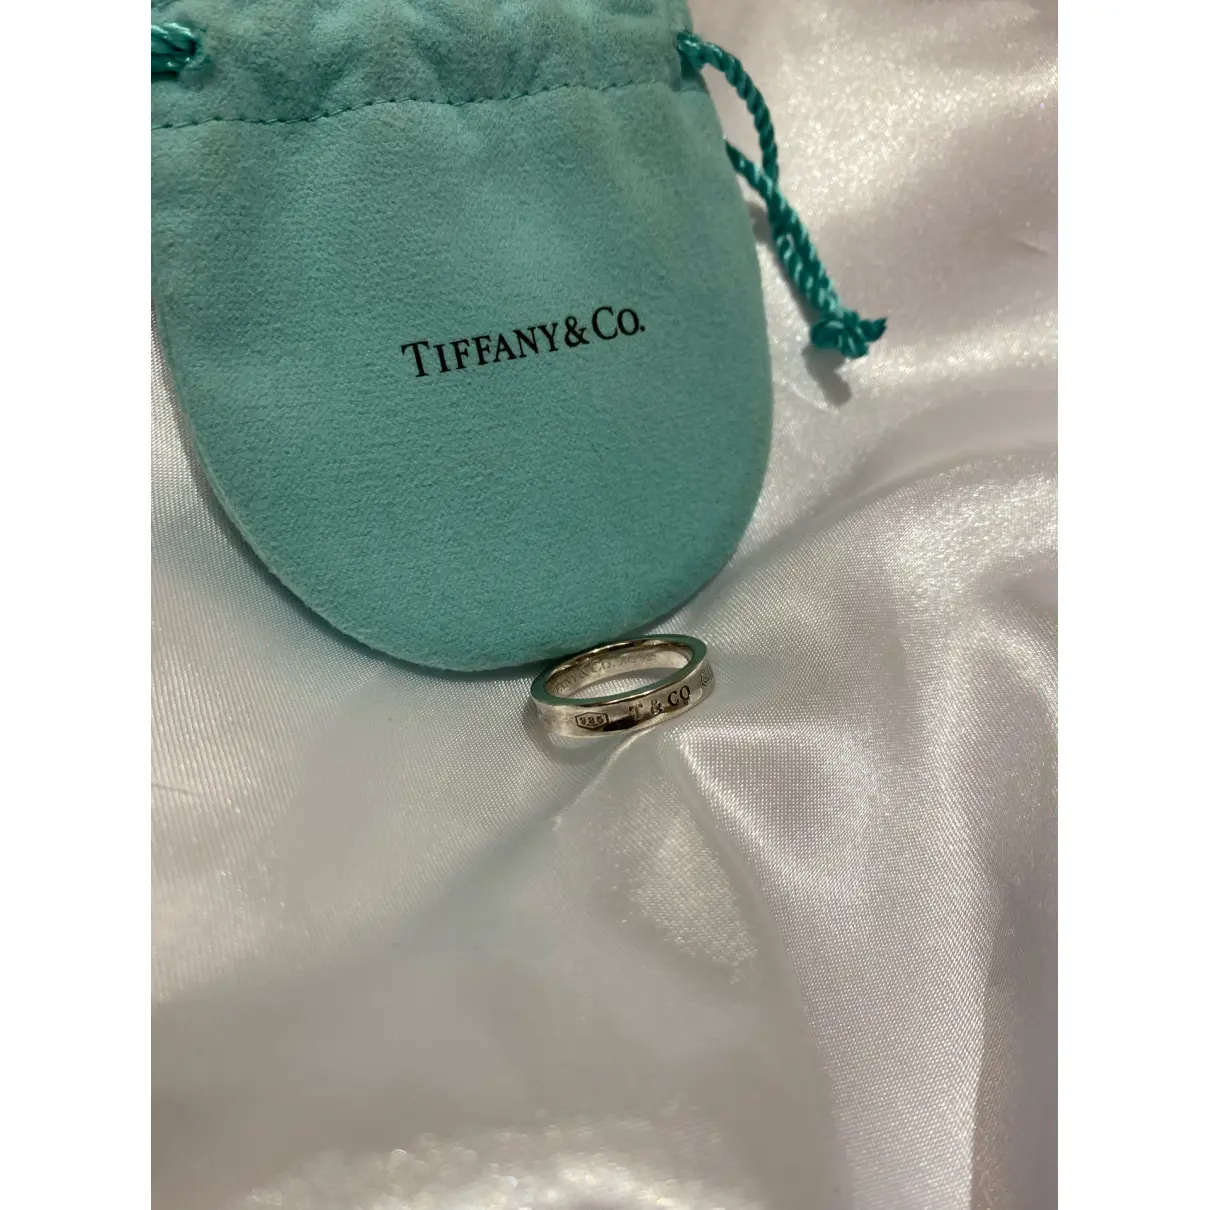 Buy Tiffany & Co Tiffany 1837 silver ring online